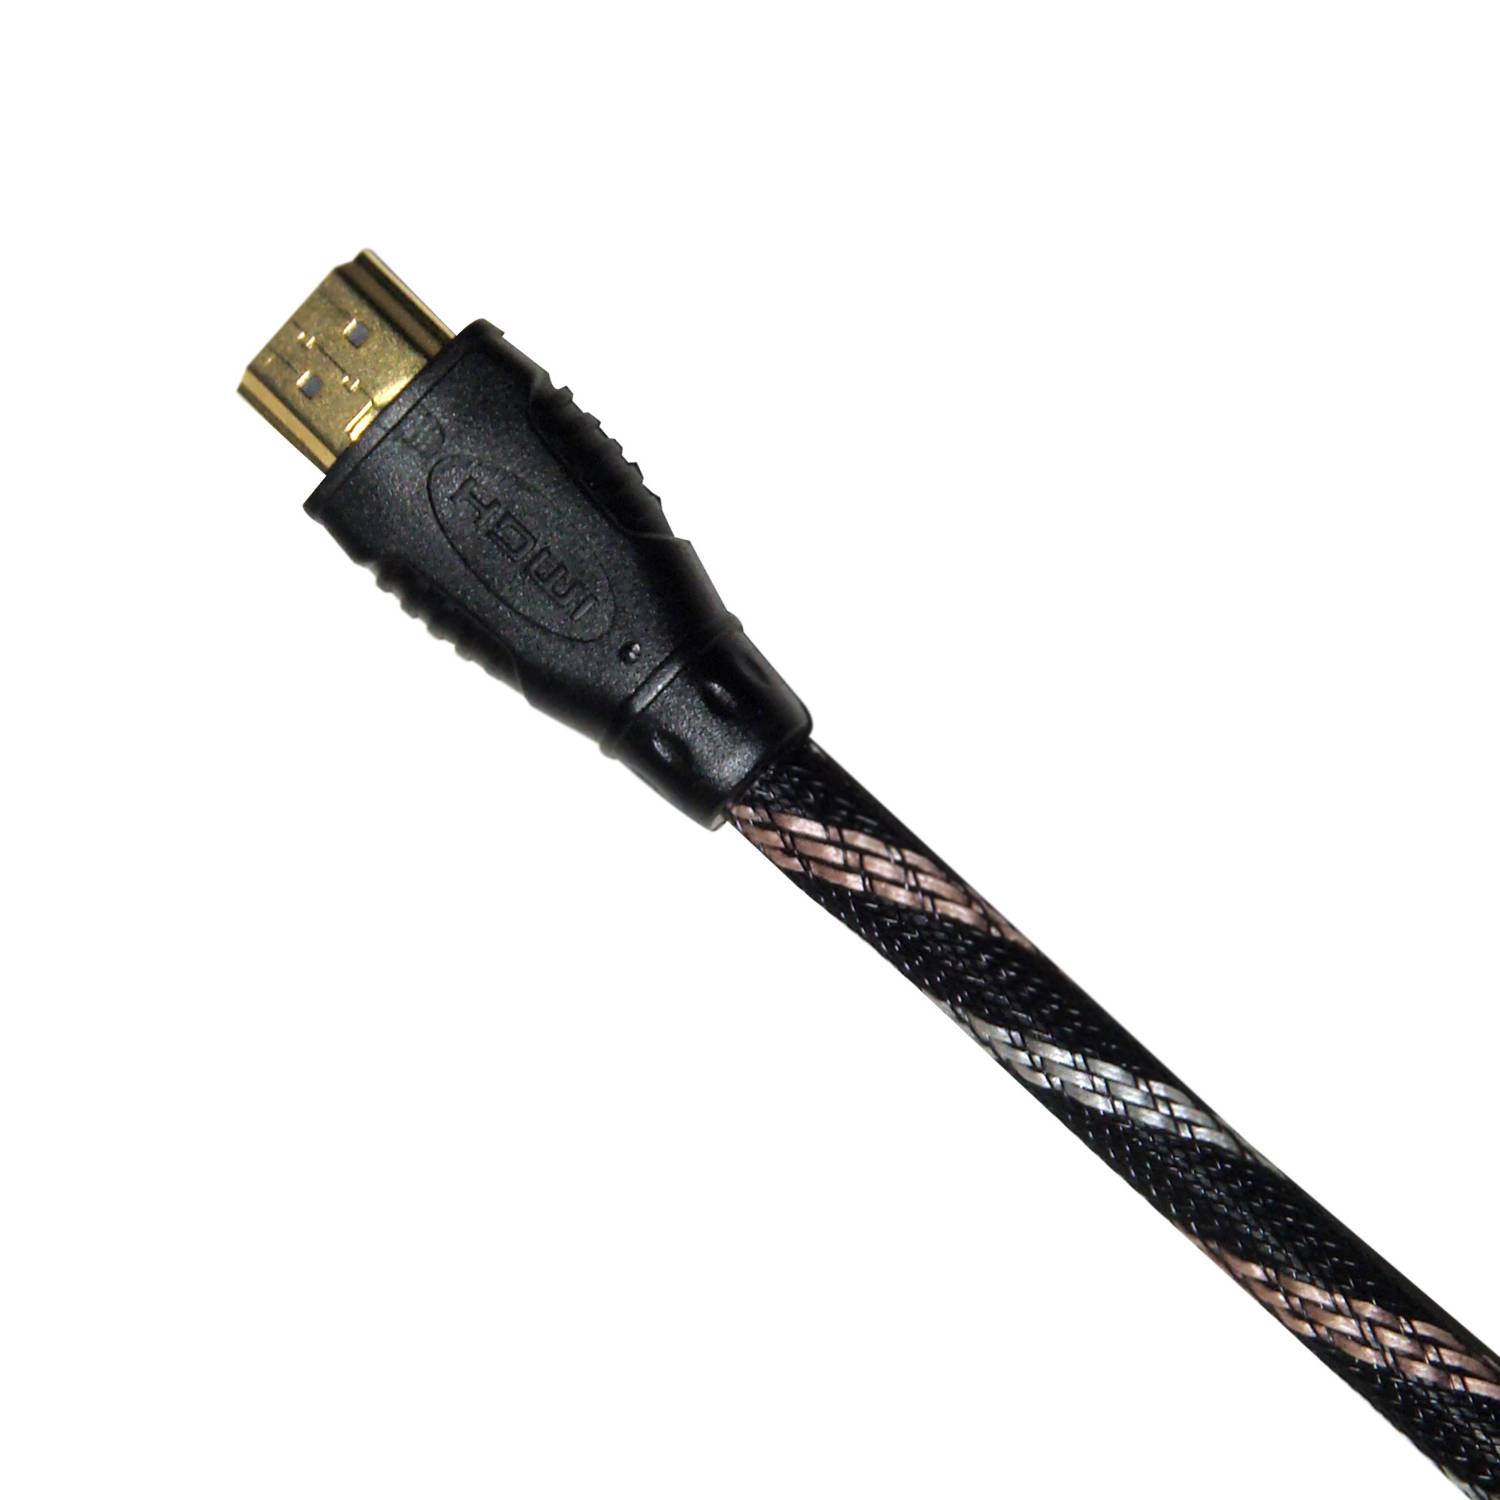 Mcable HDMI Cabel Version 2.0 (5 Meter) M-HDMI-C